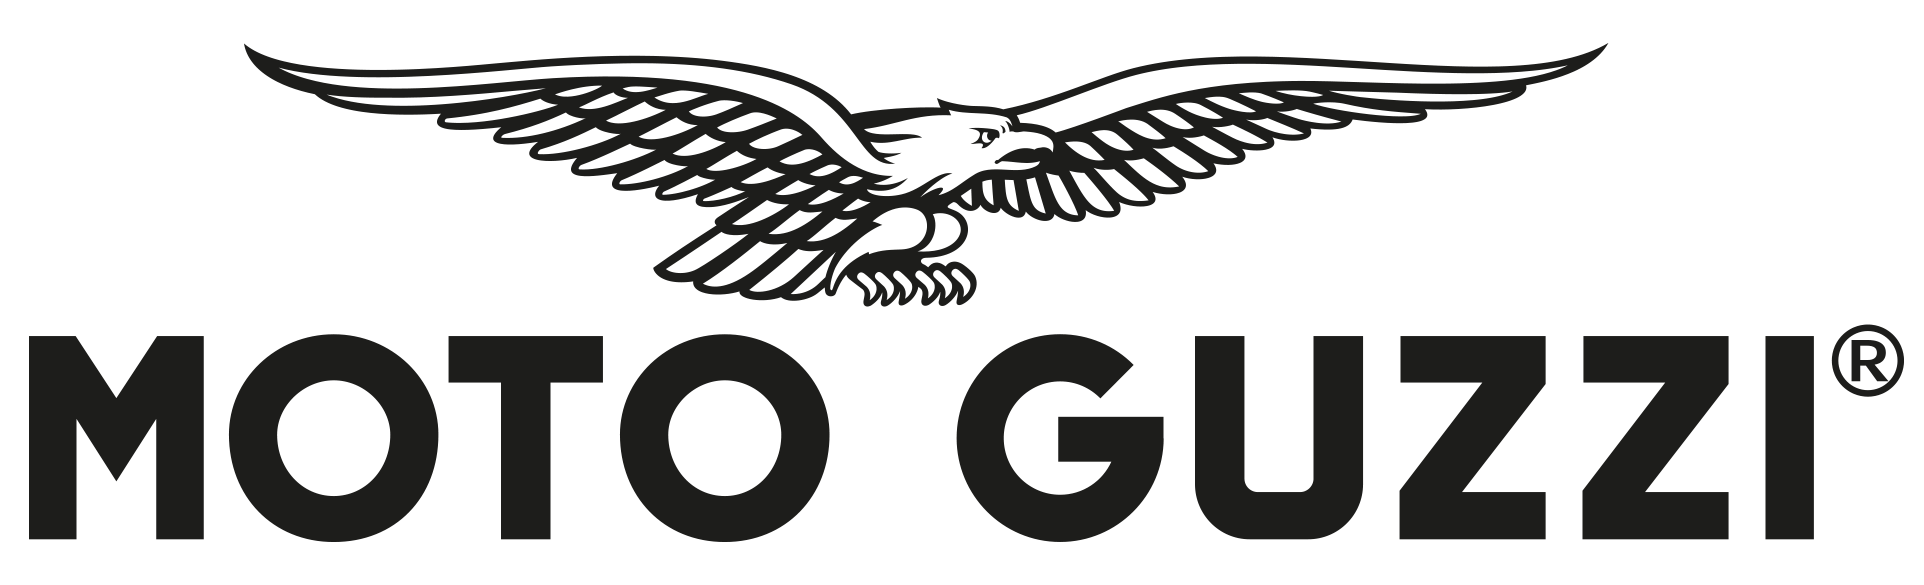 Moto Guzzi Open House 2017